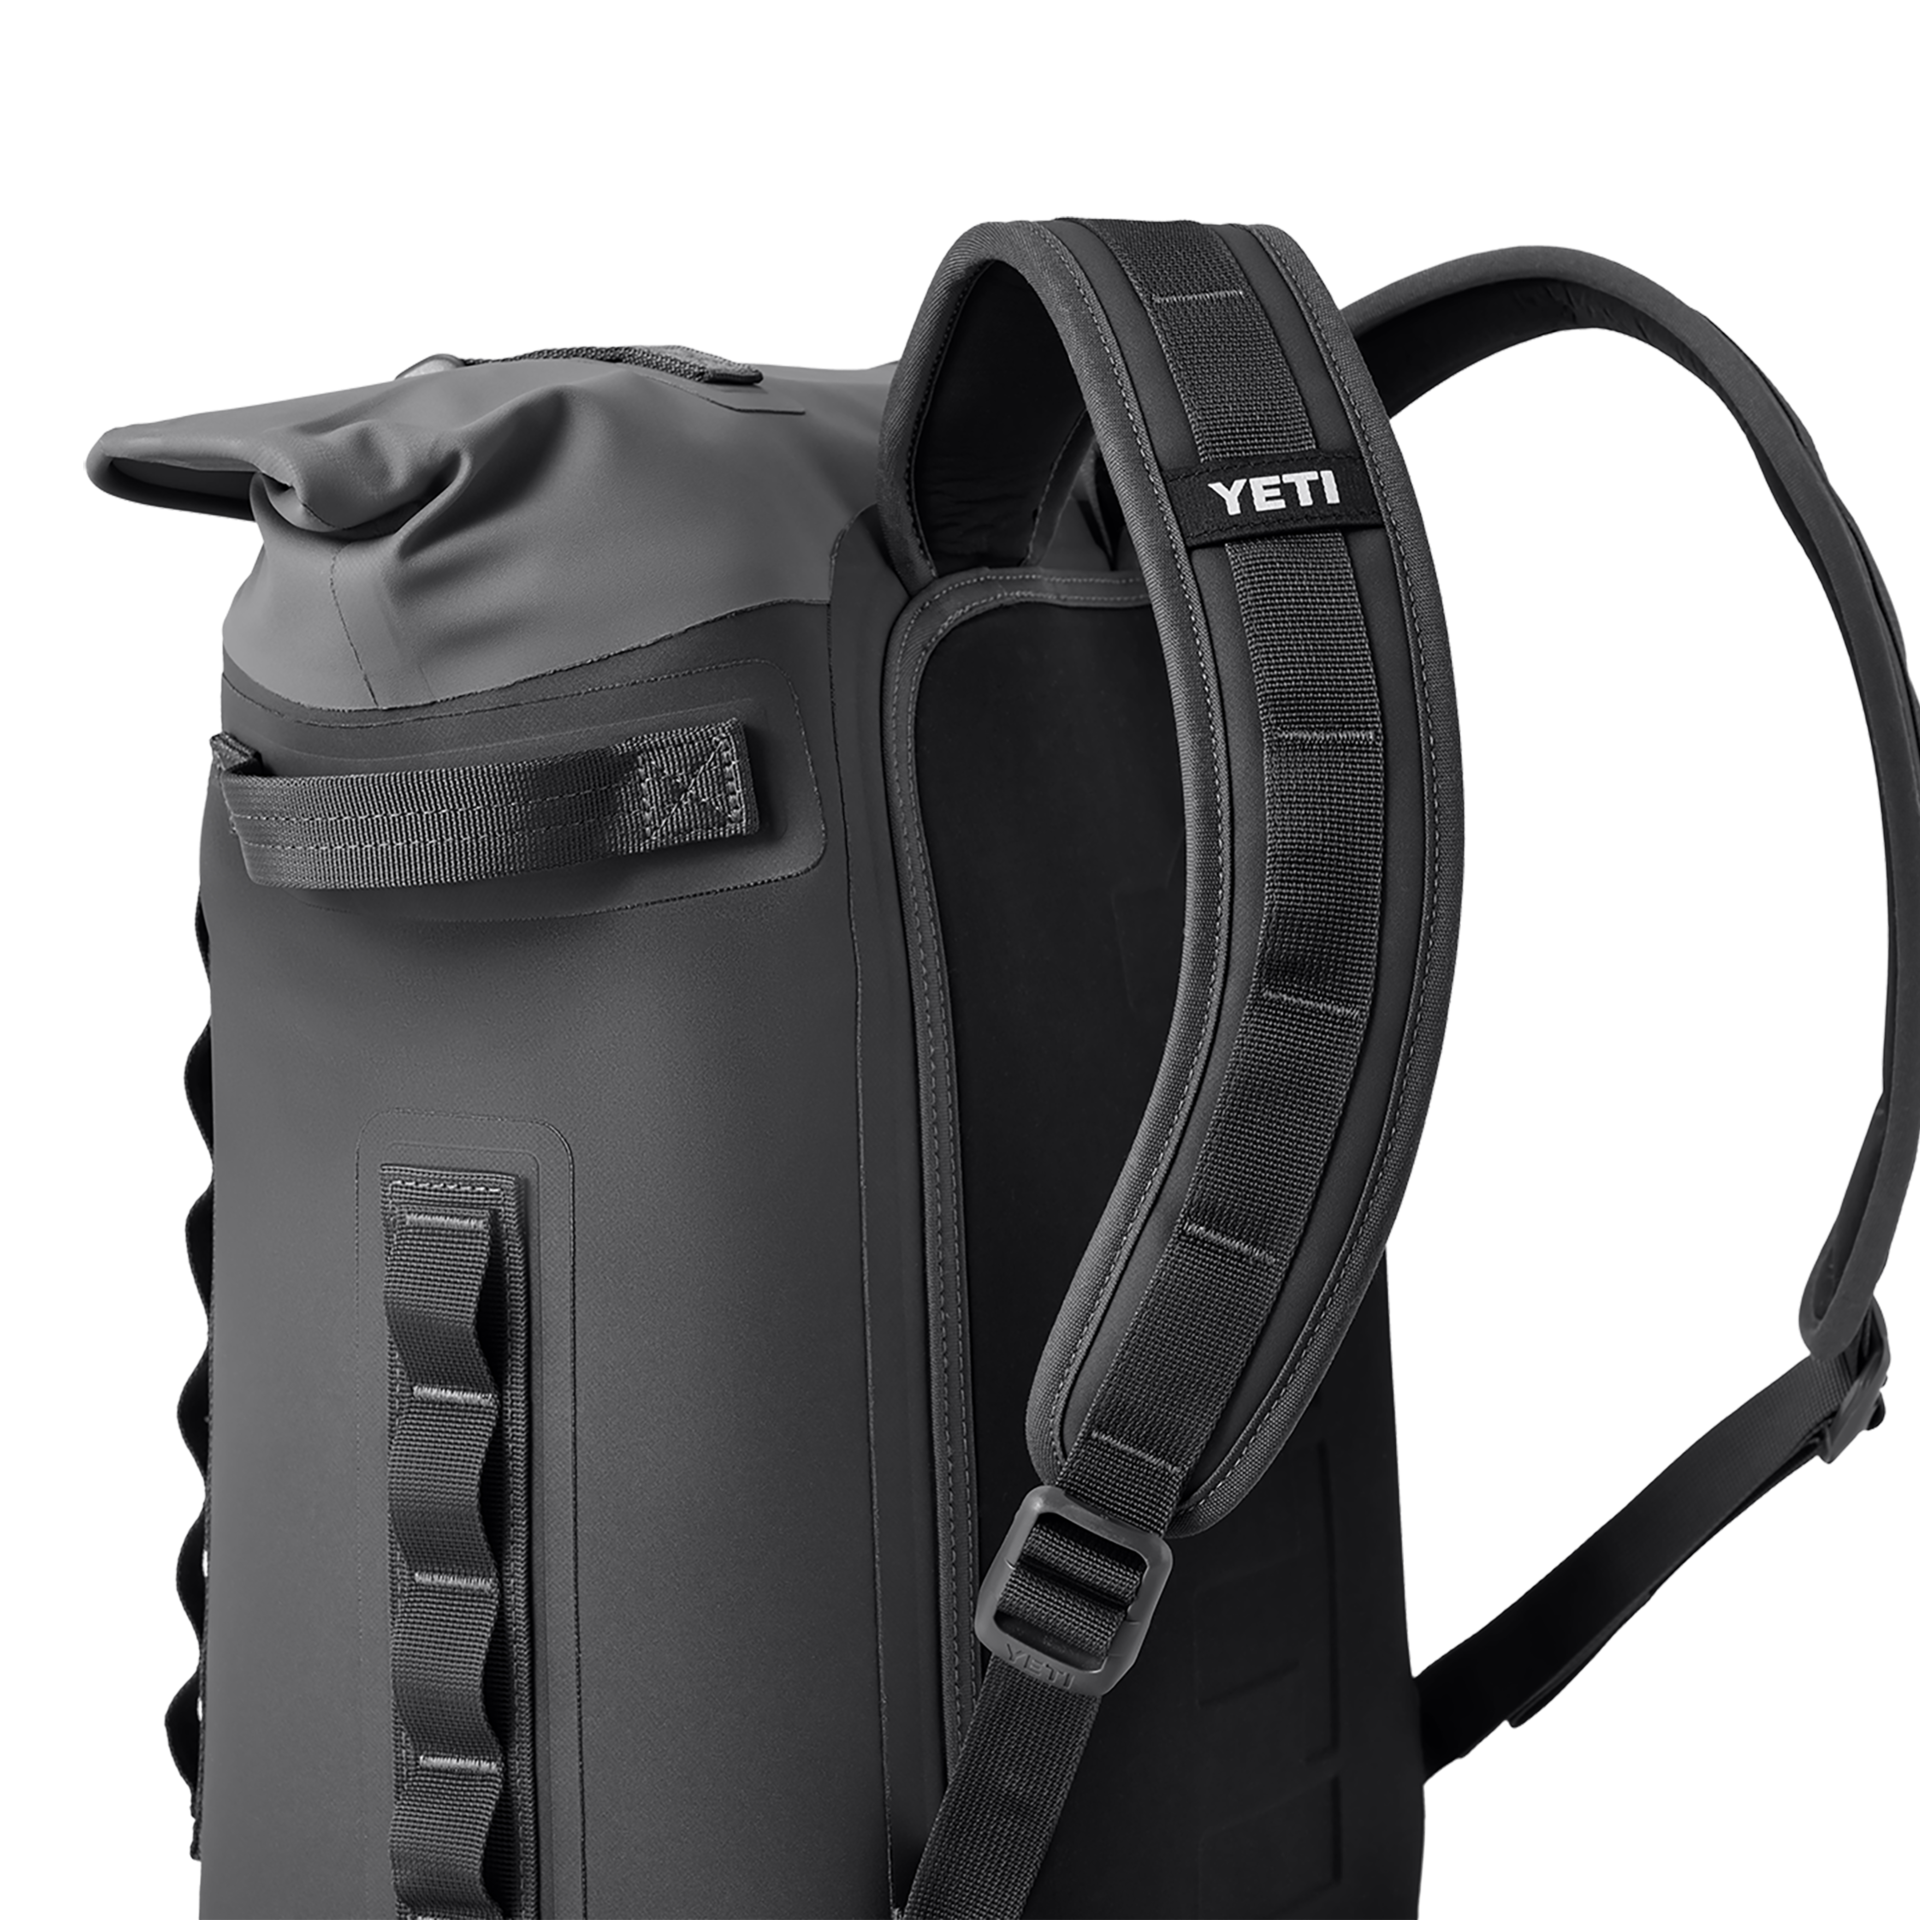 Hopper Backpack M20 - Charcoal